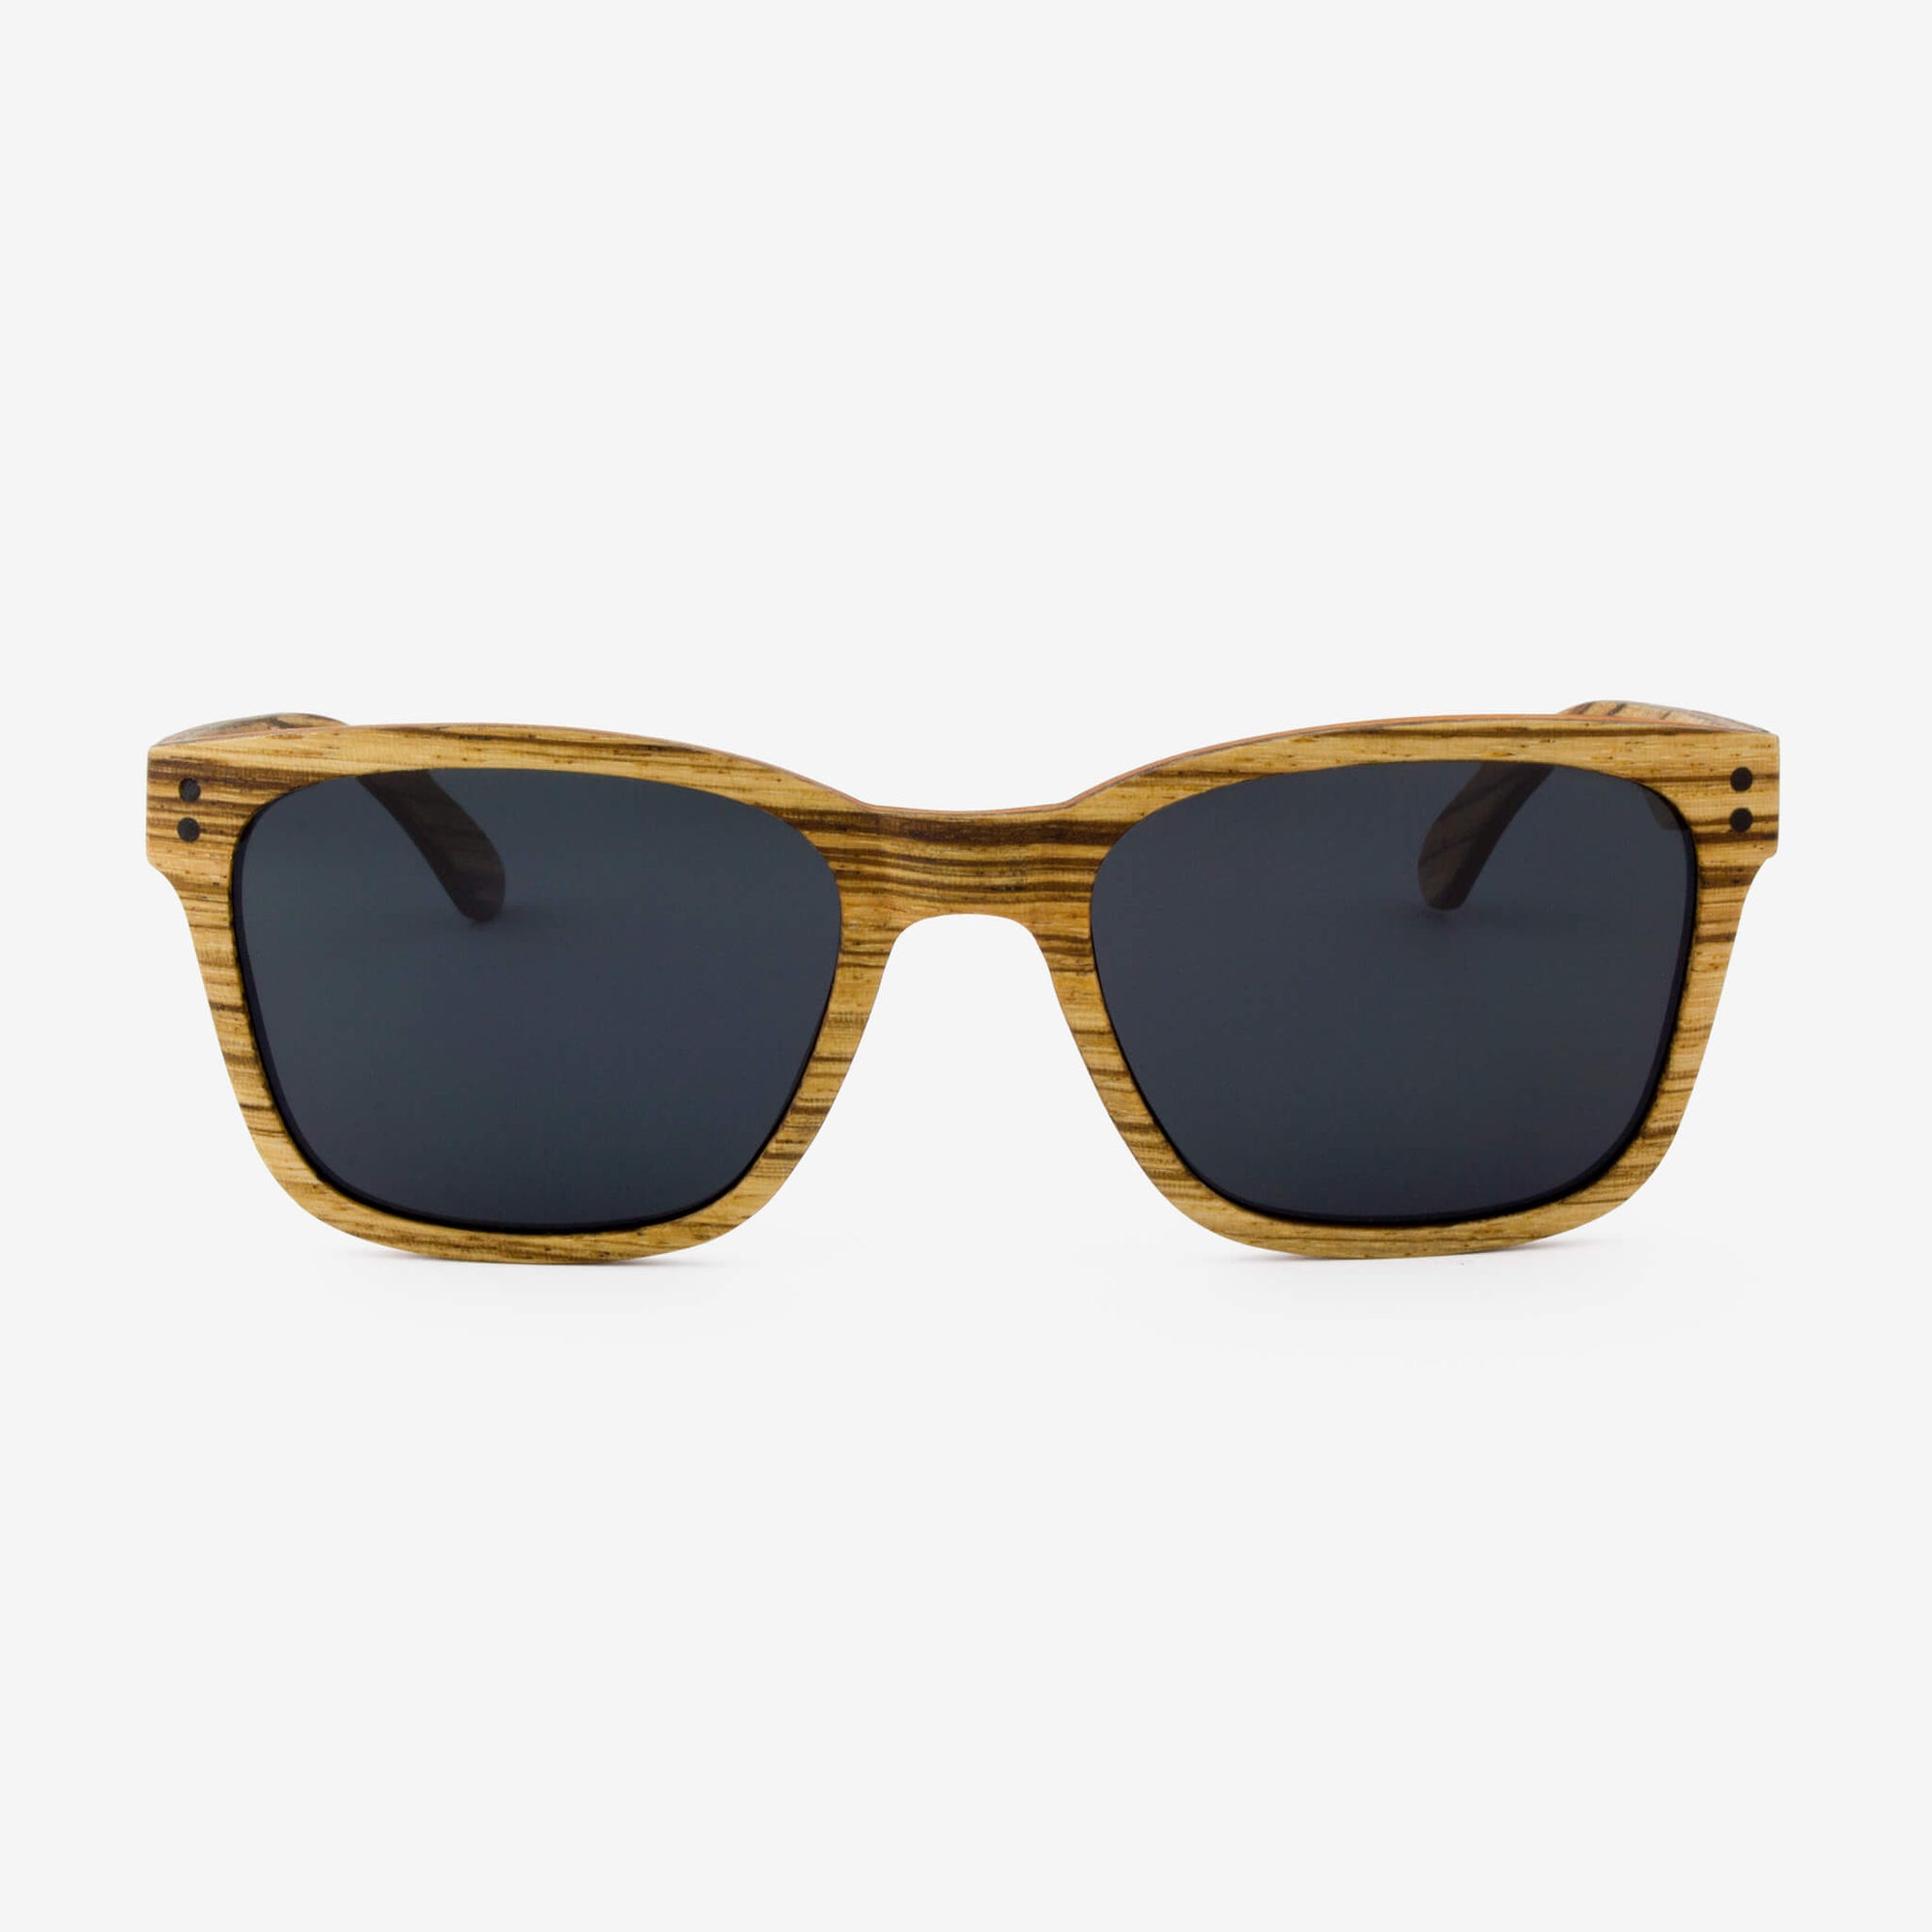 Flagler zebrawood adjustable wood sunglasses